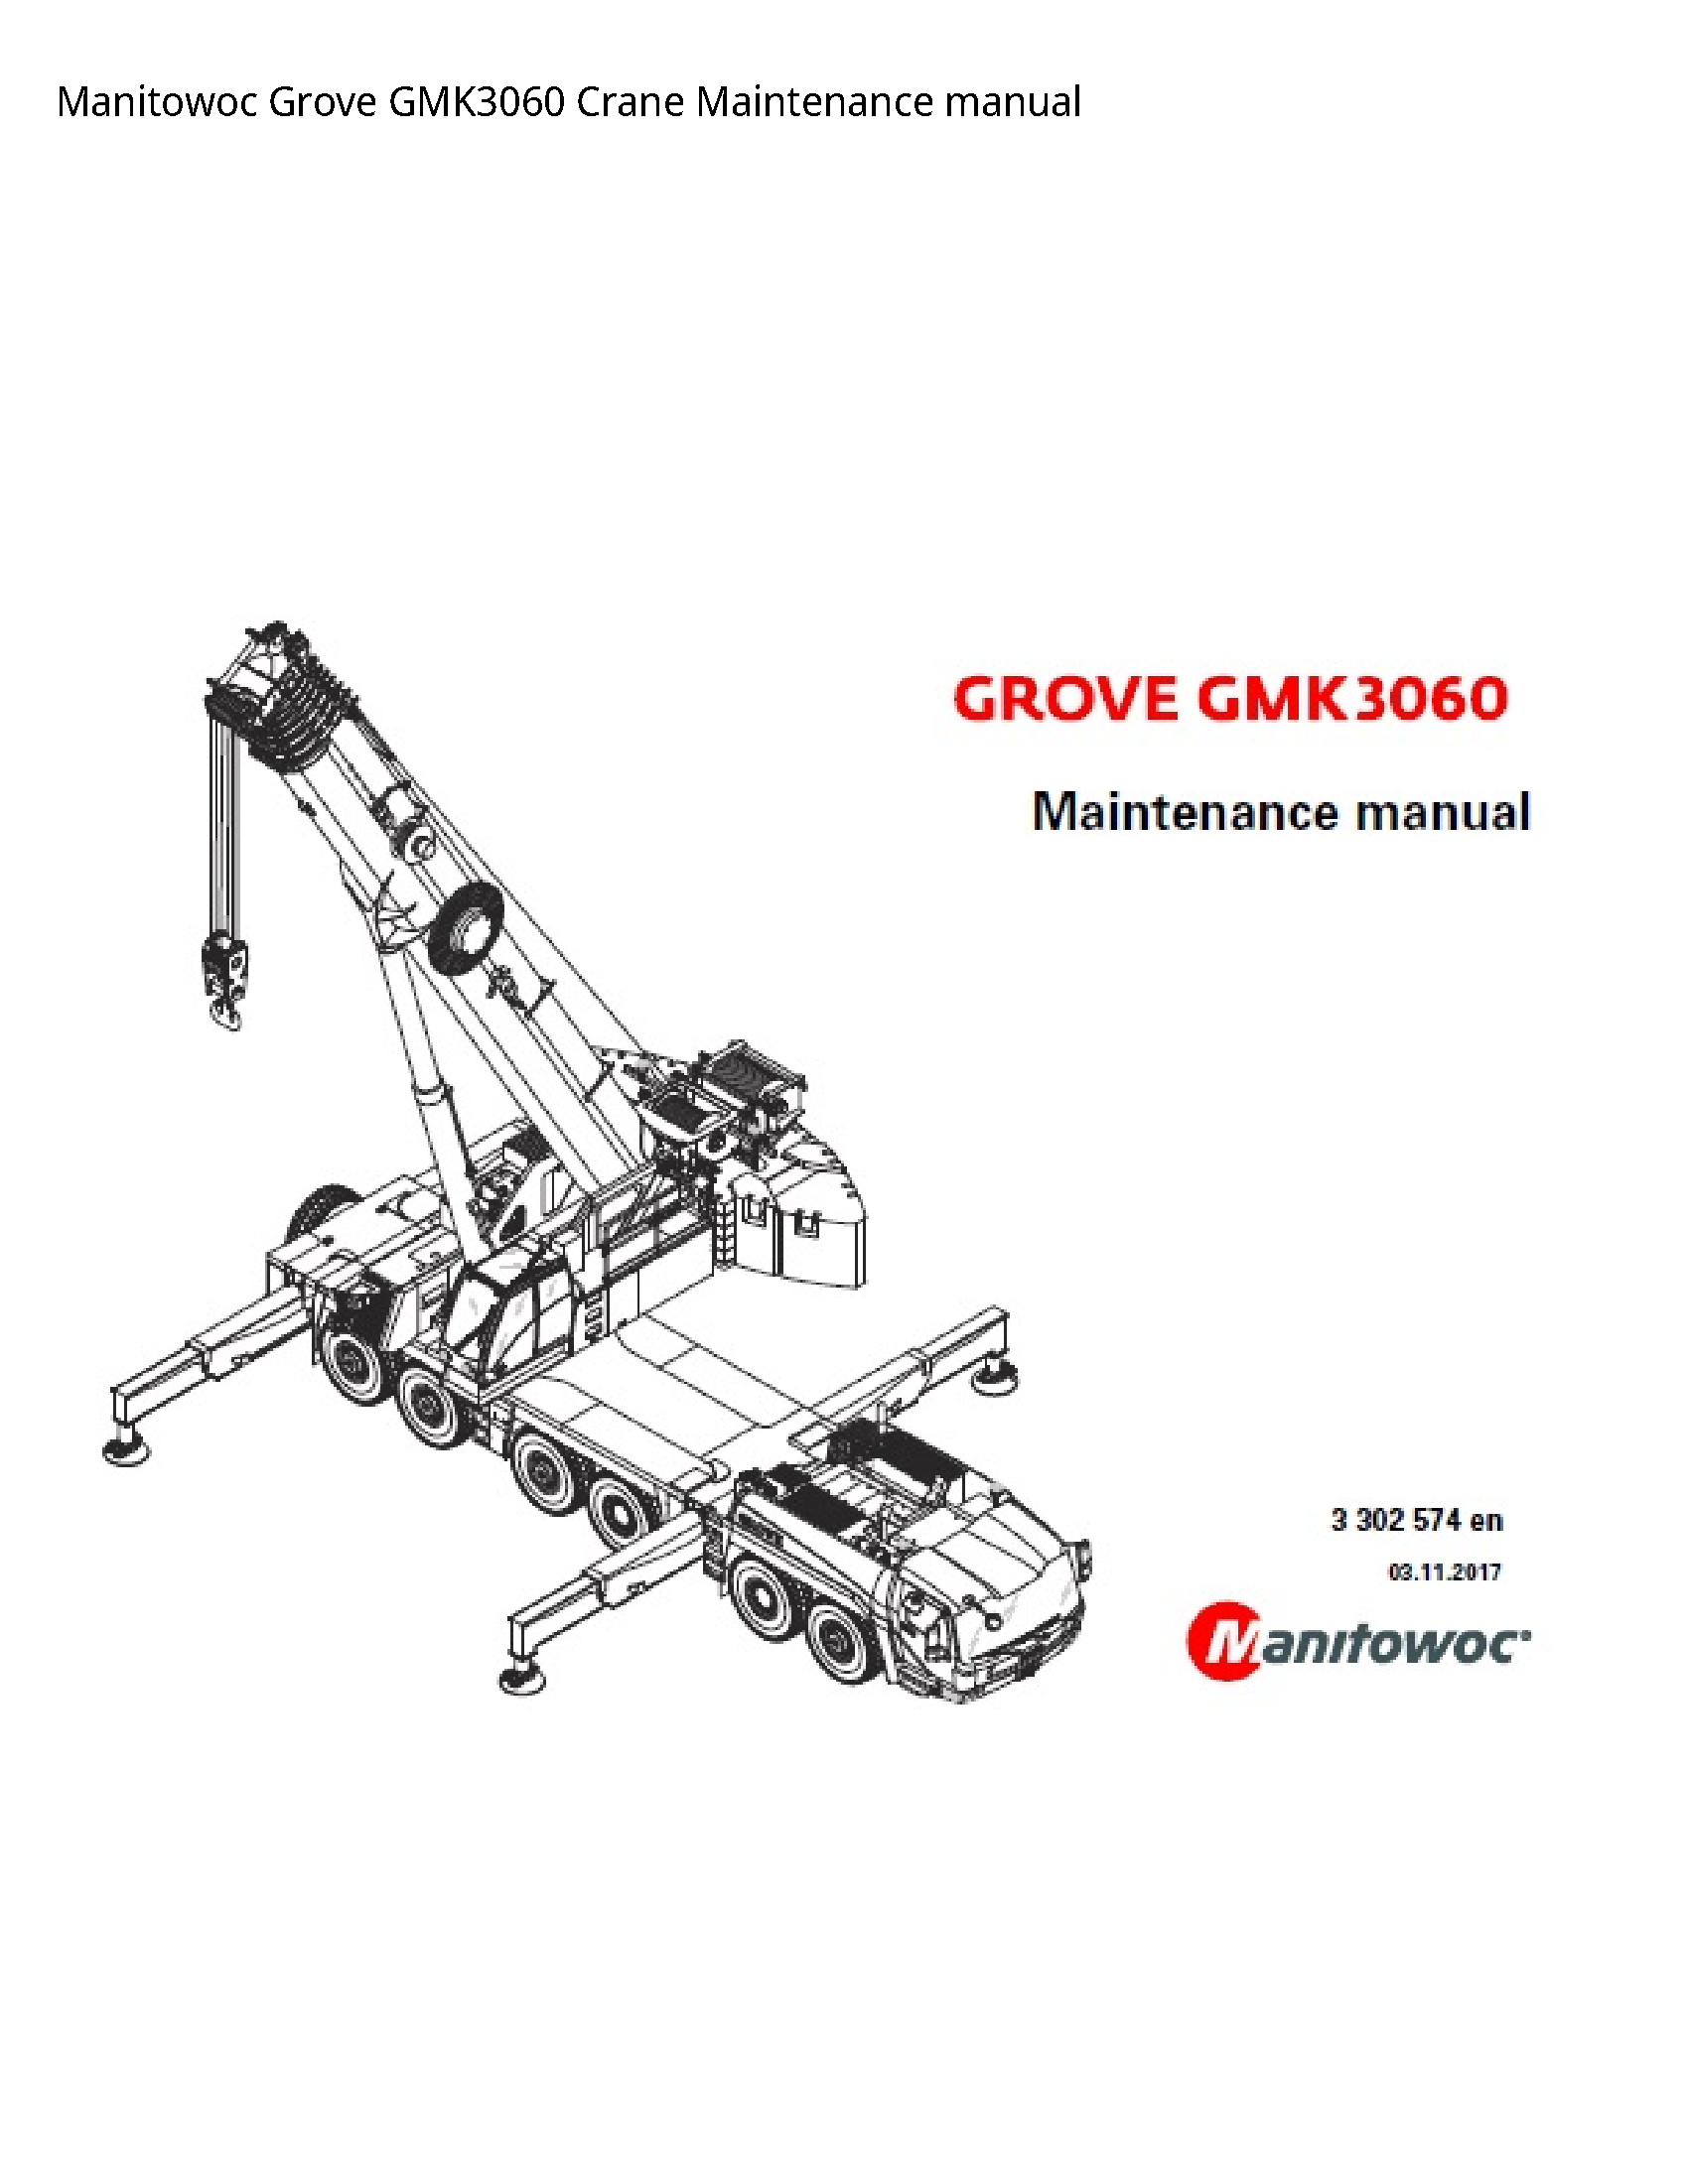 Manitowoc GMK3060 Grove Crane Maintenance manual